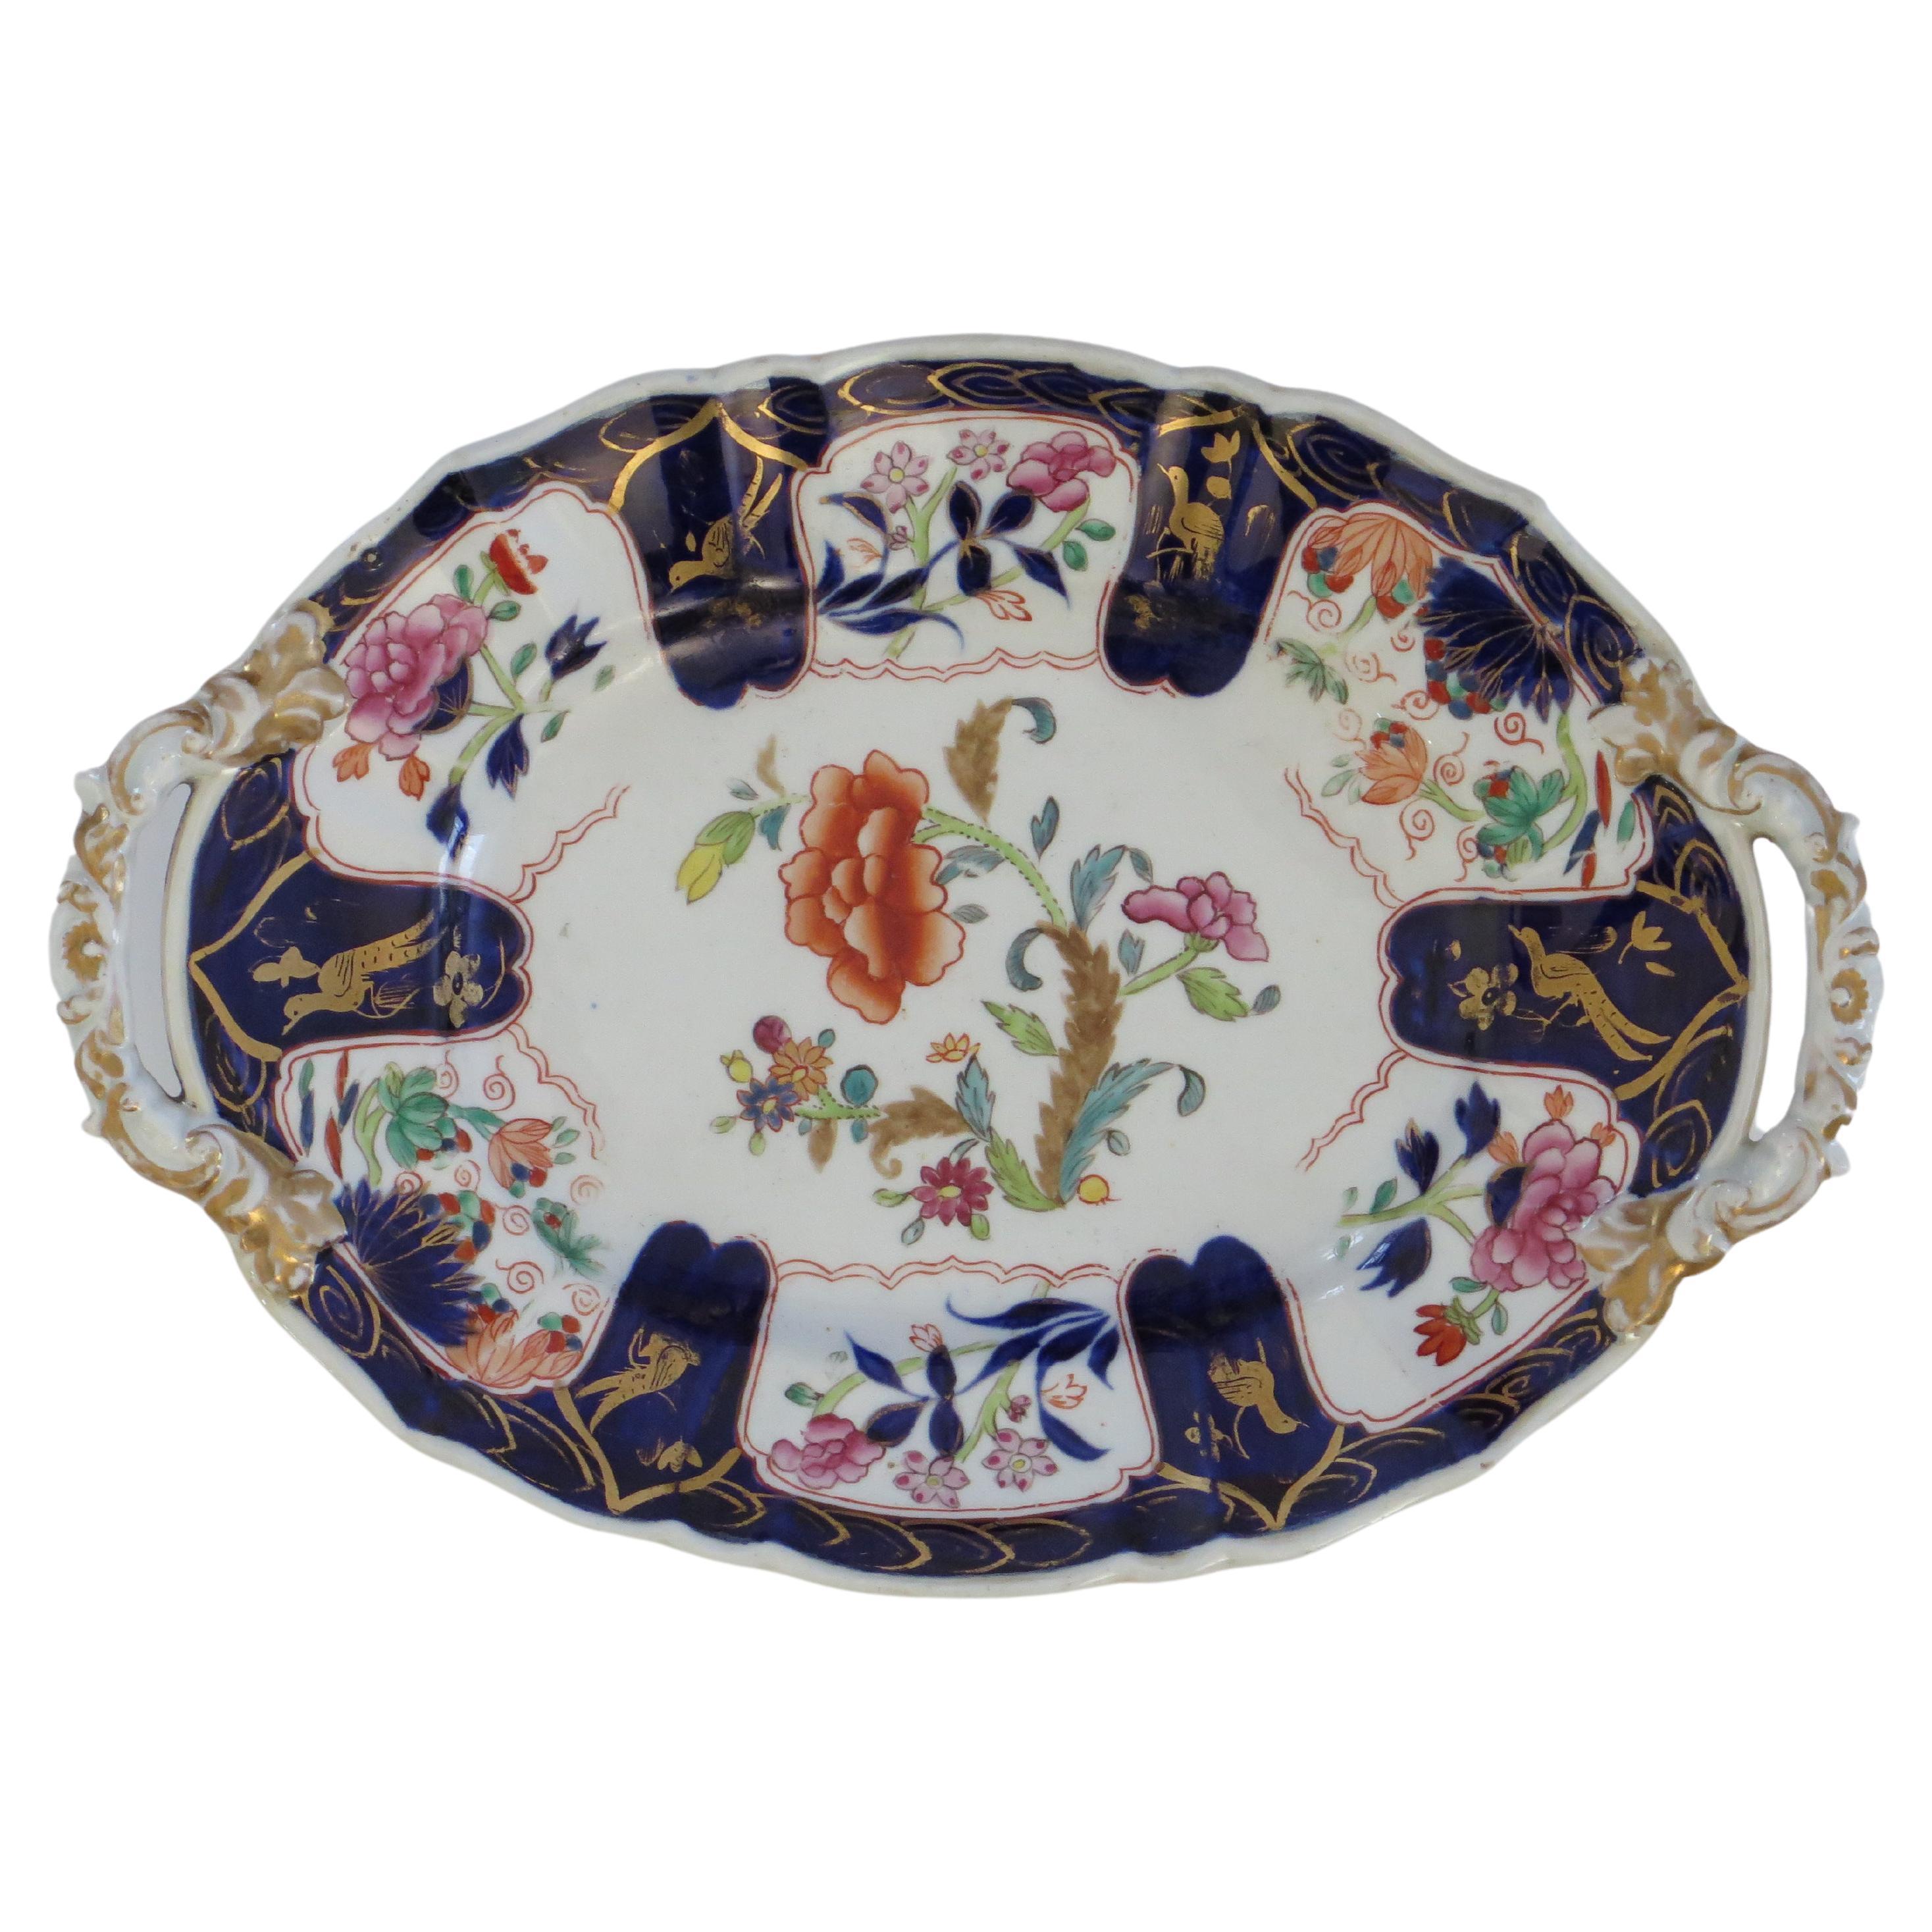 Masons Ironstone Oval Platter in Gold Pheasants Peony & Fern pattern, Ca 1820 For Sale